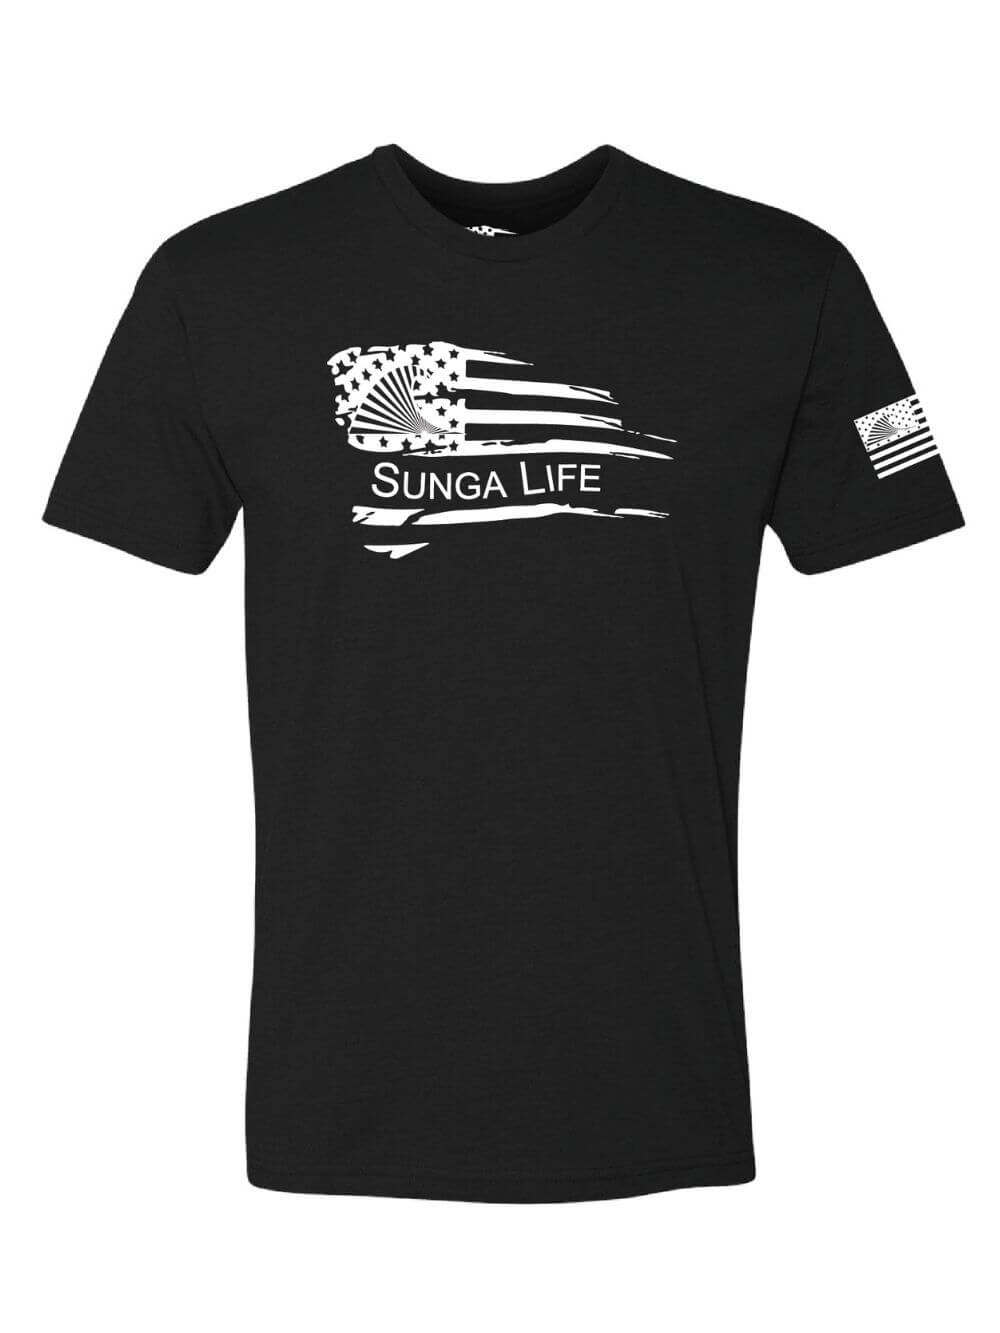 Sunga Life War-Torn American Flag T-Shirt